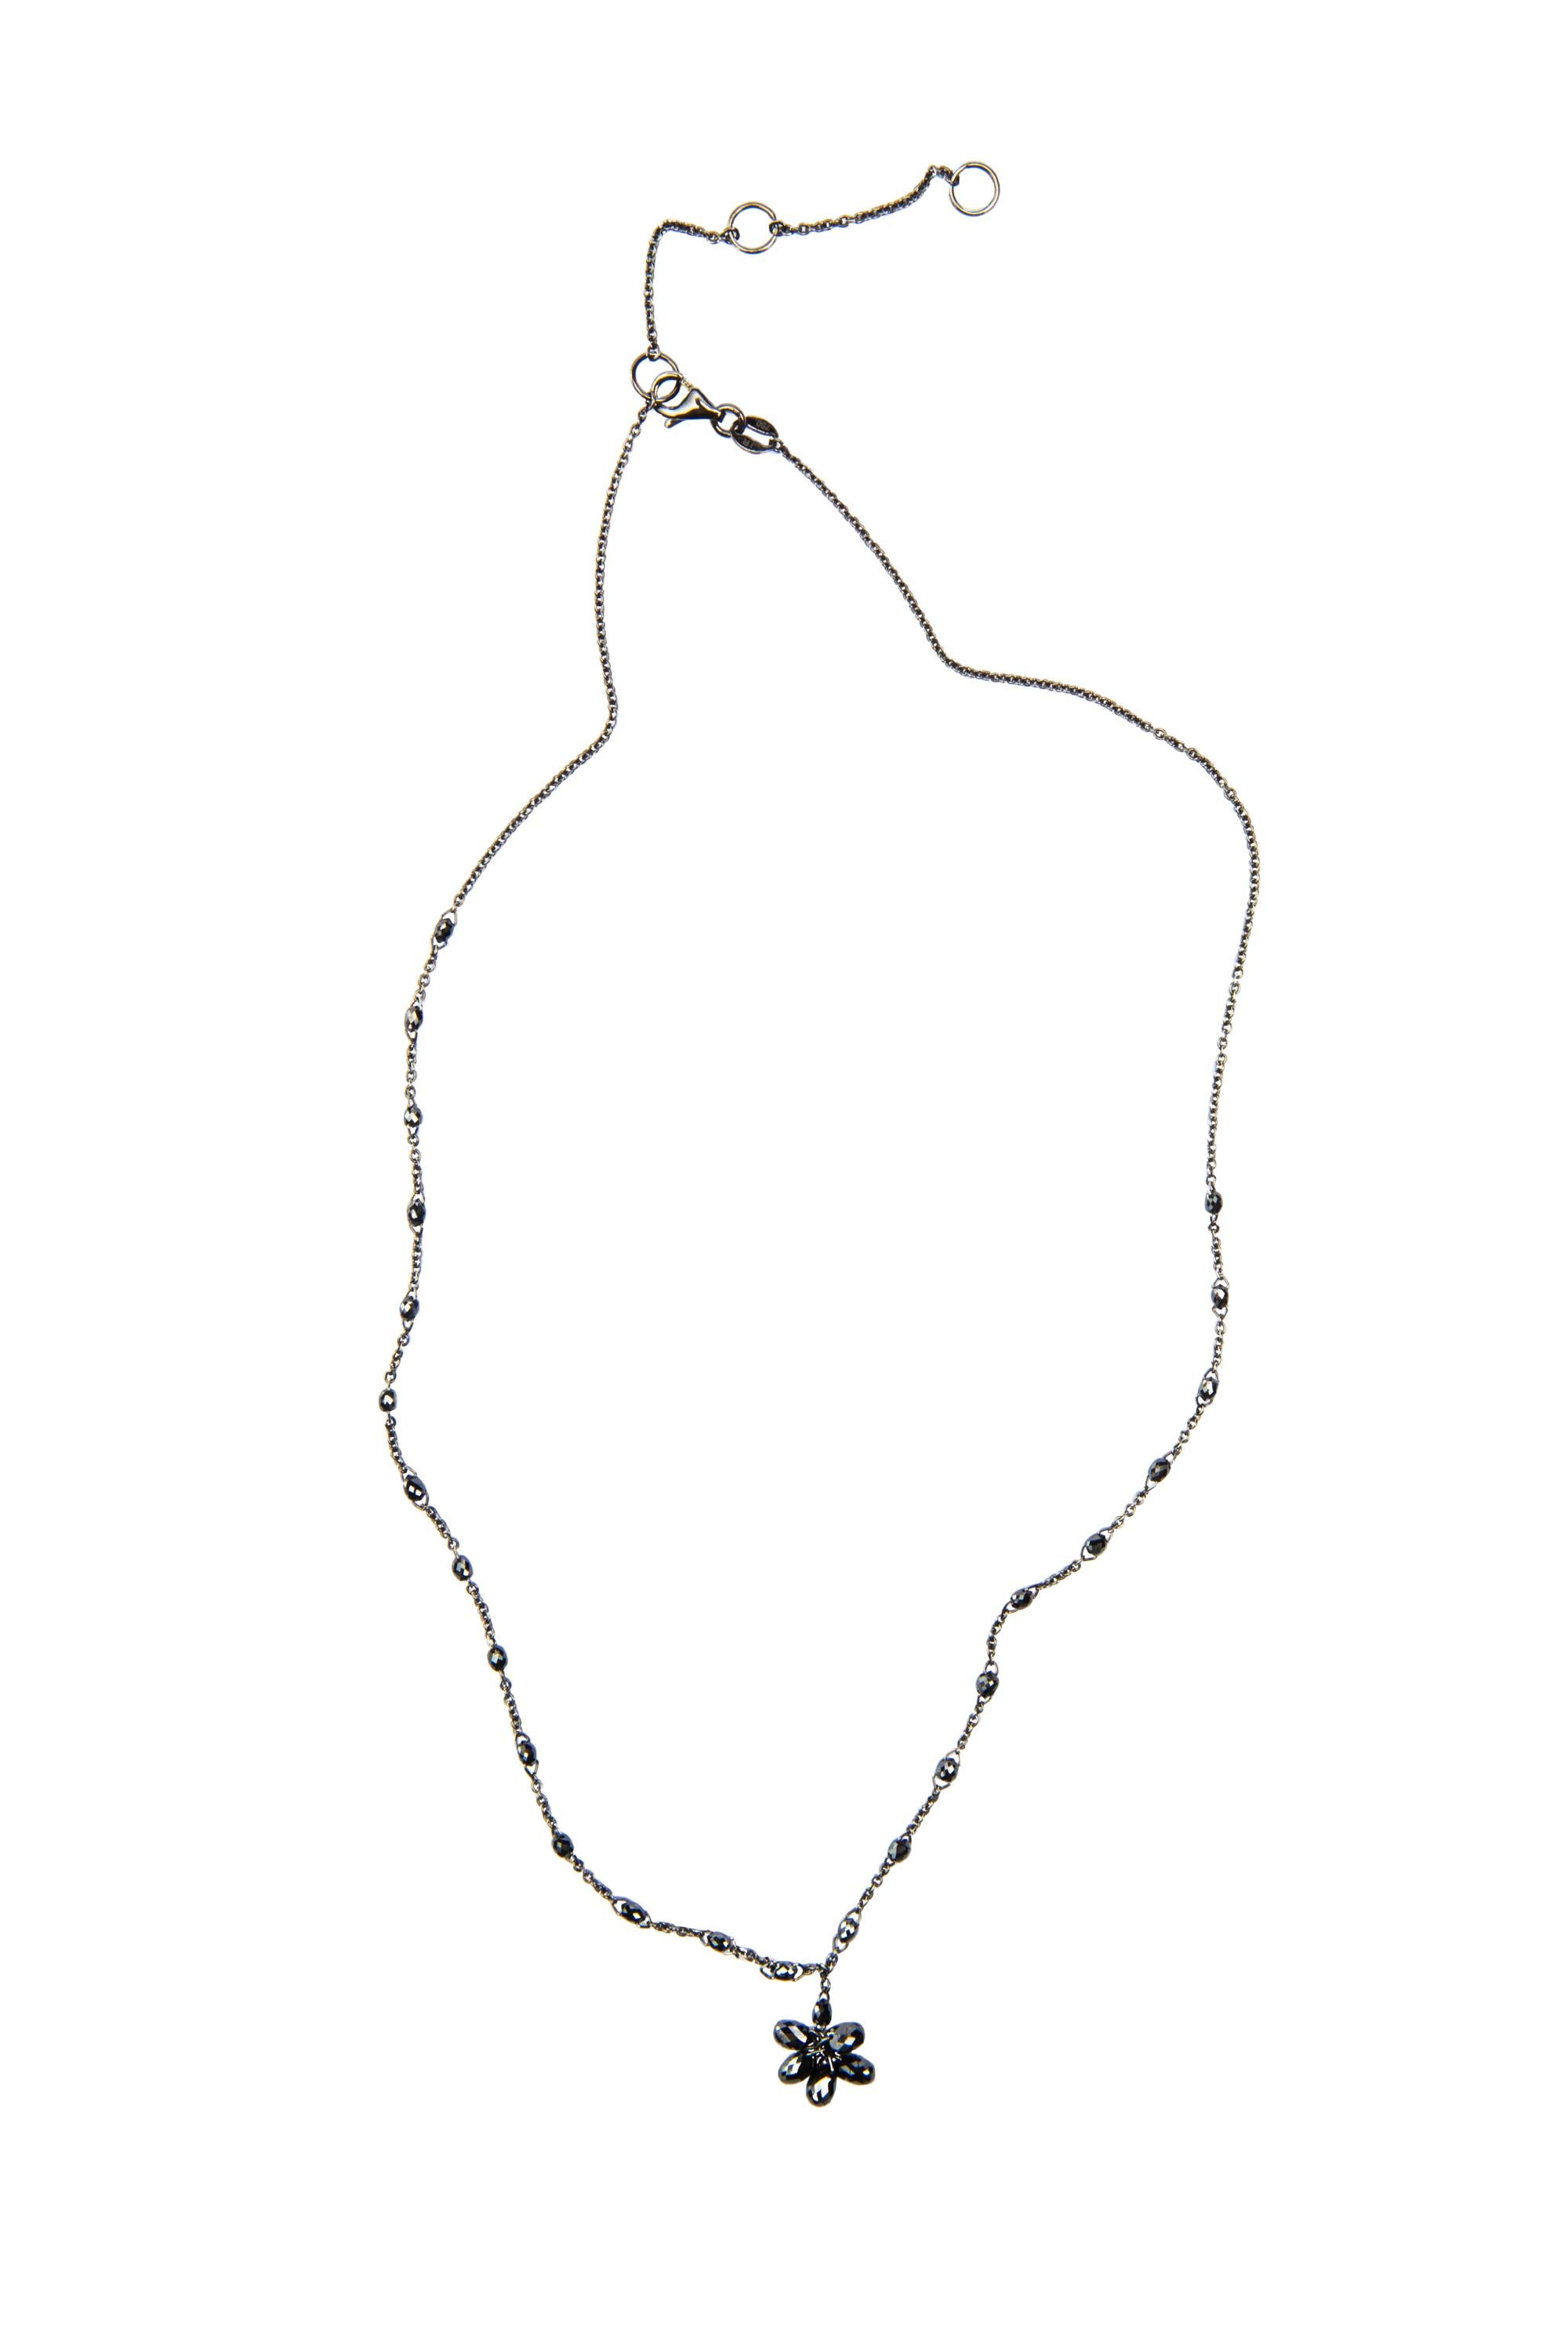 black beads necklace with diamond pendant